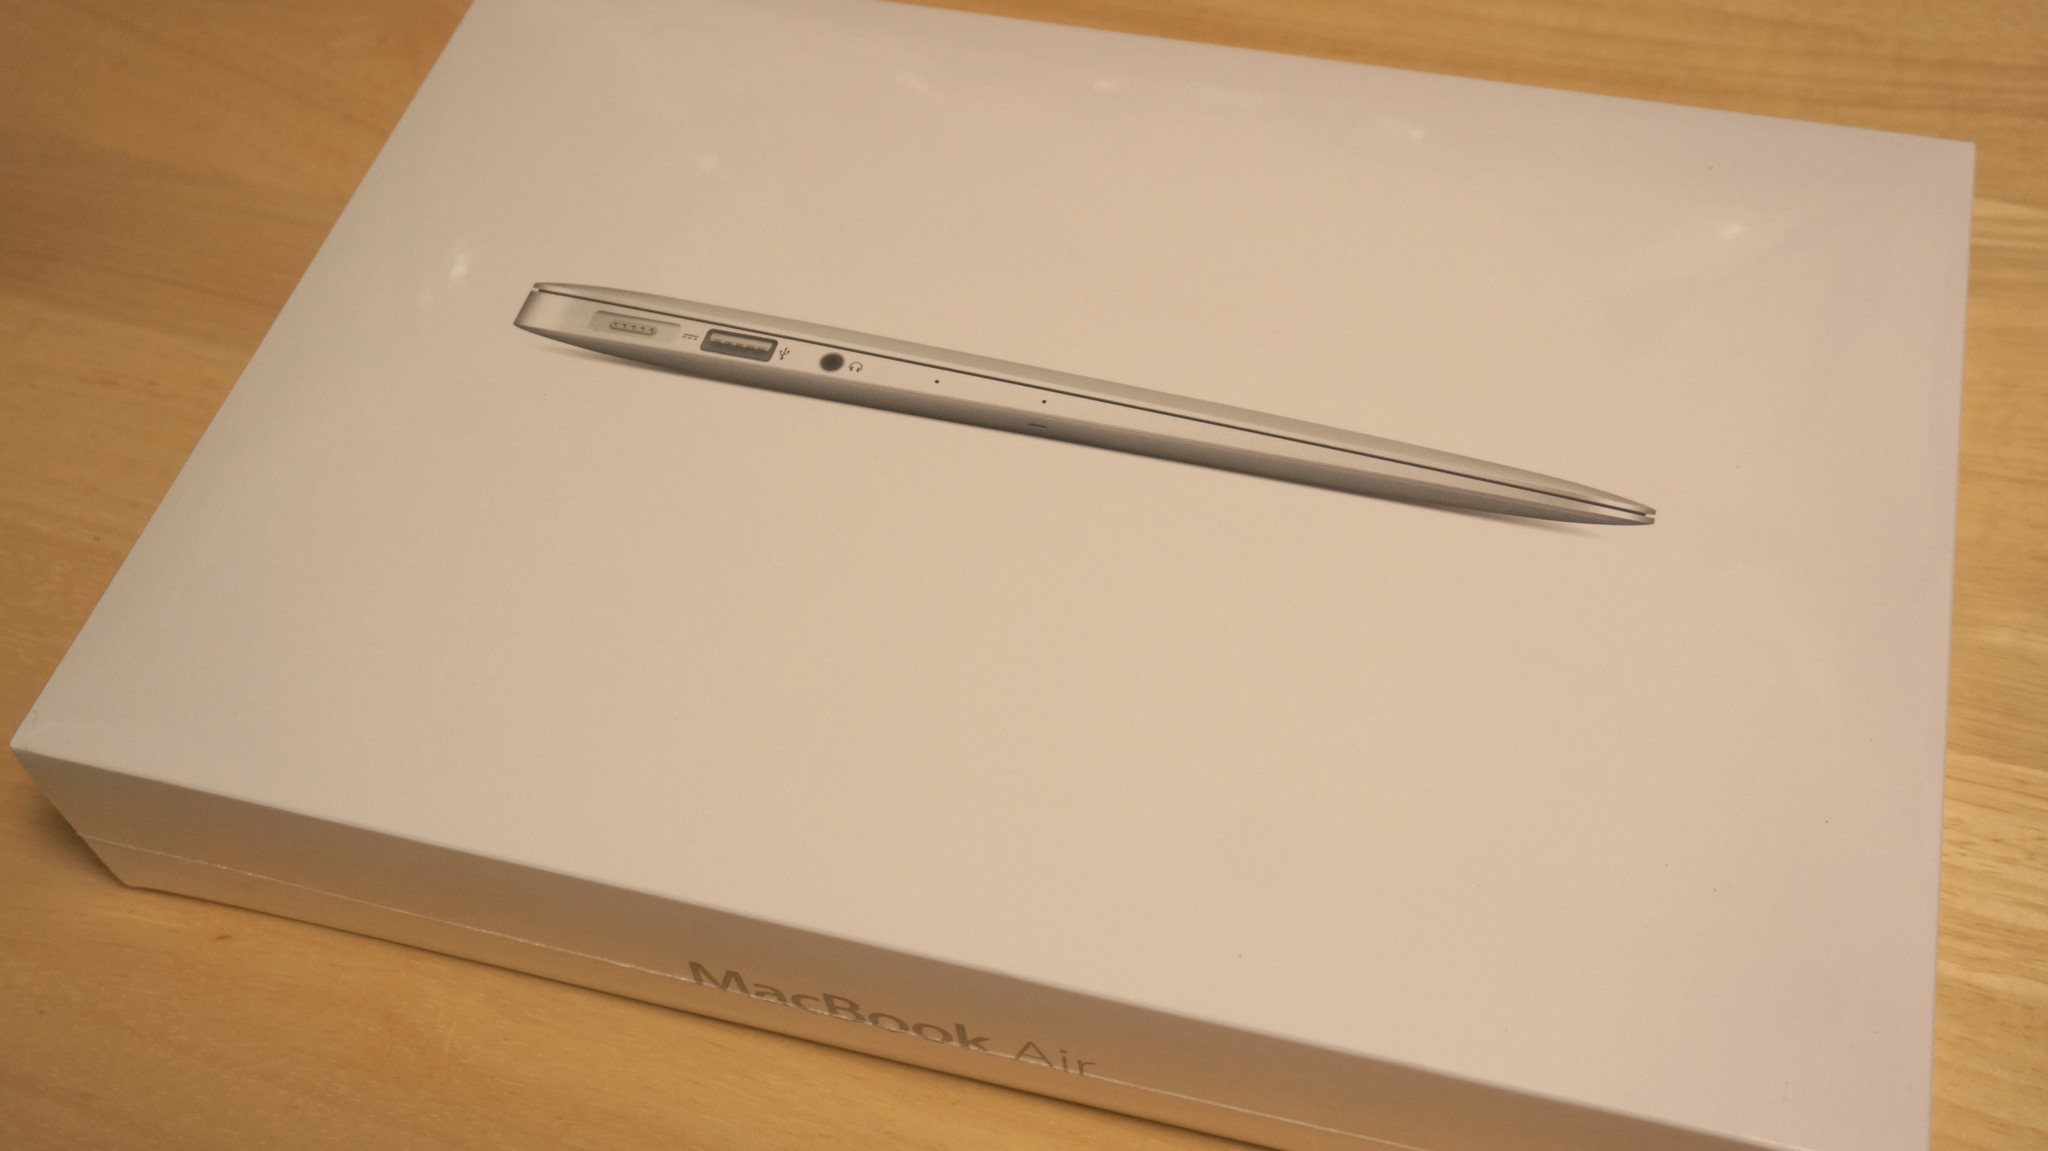 MacBookAir-11-inch-2014-early